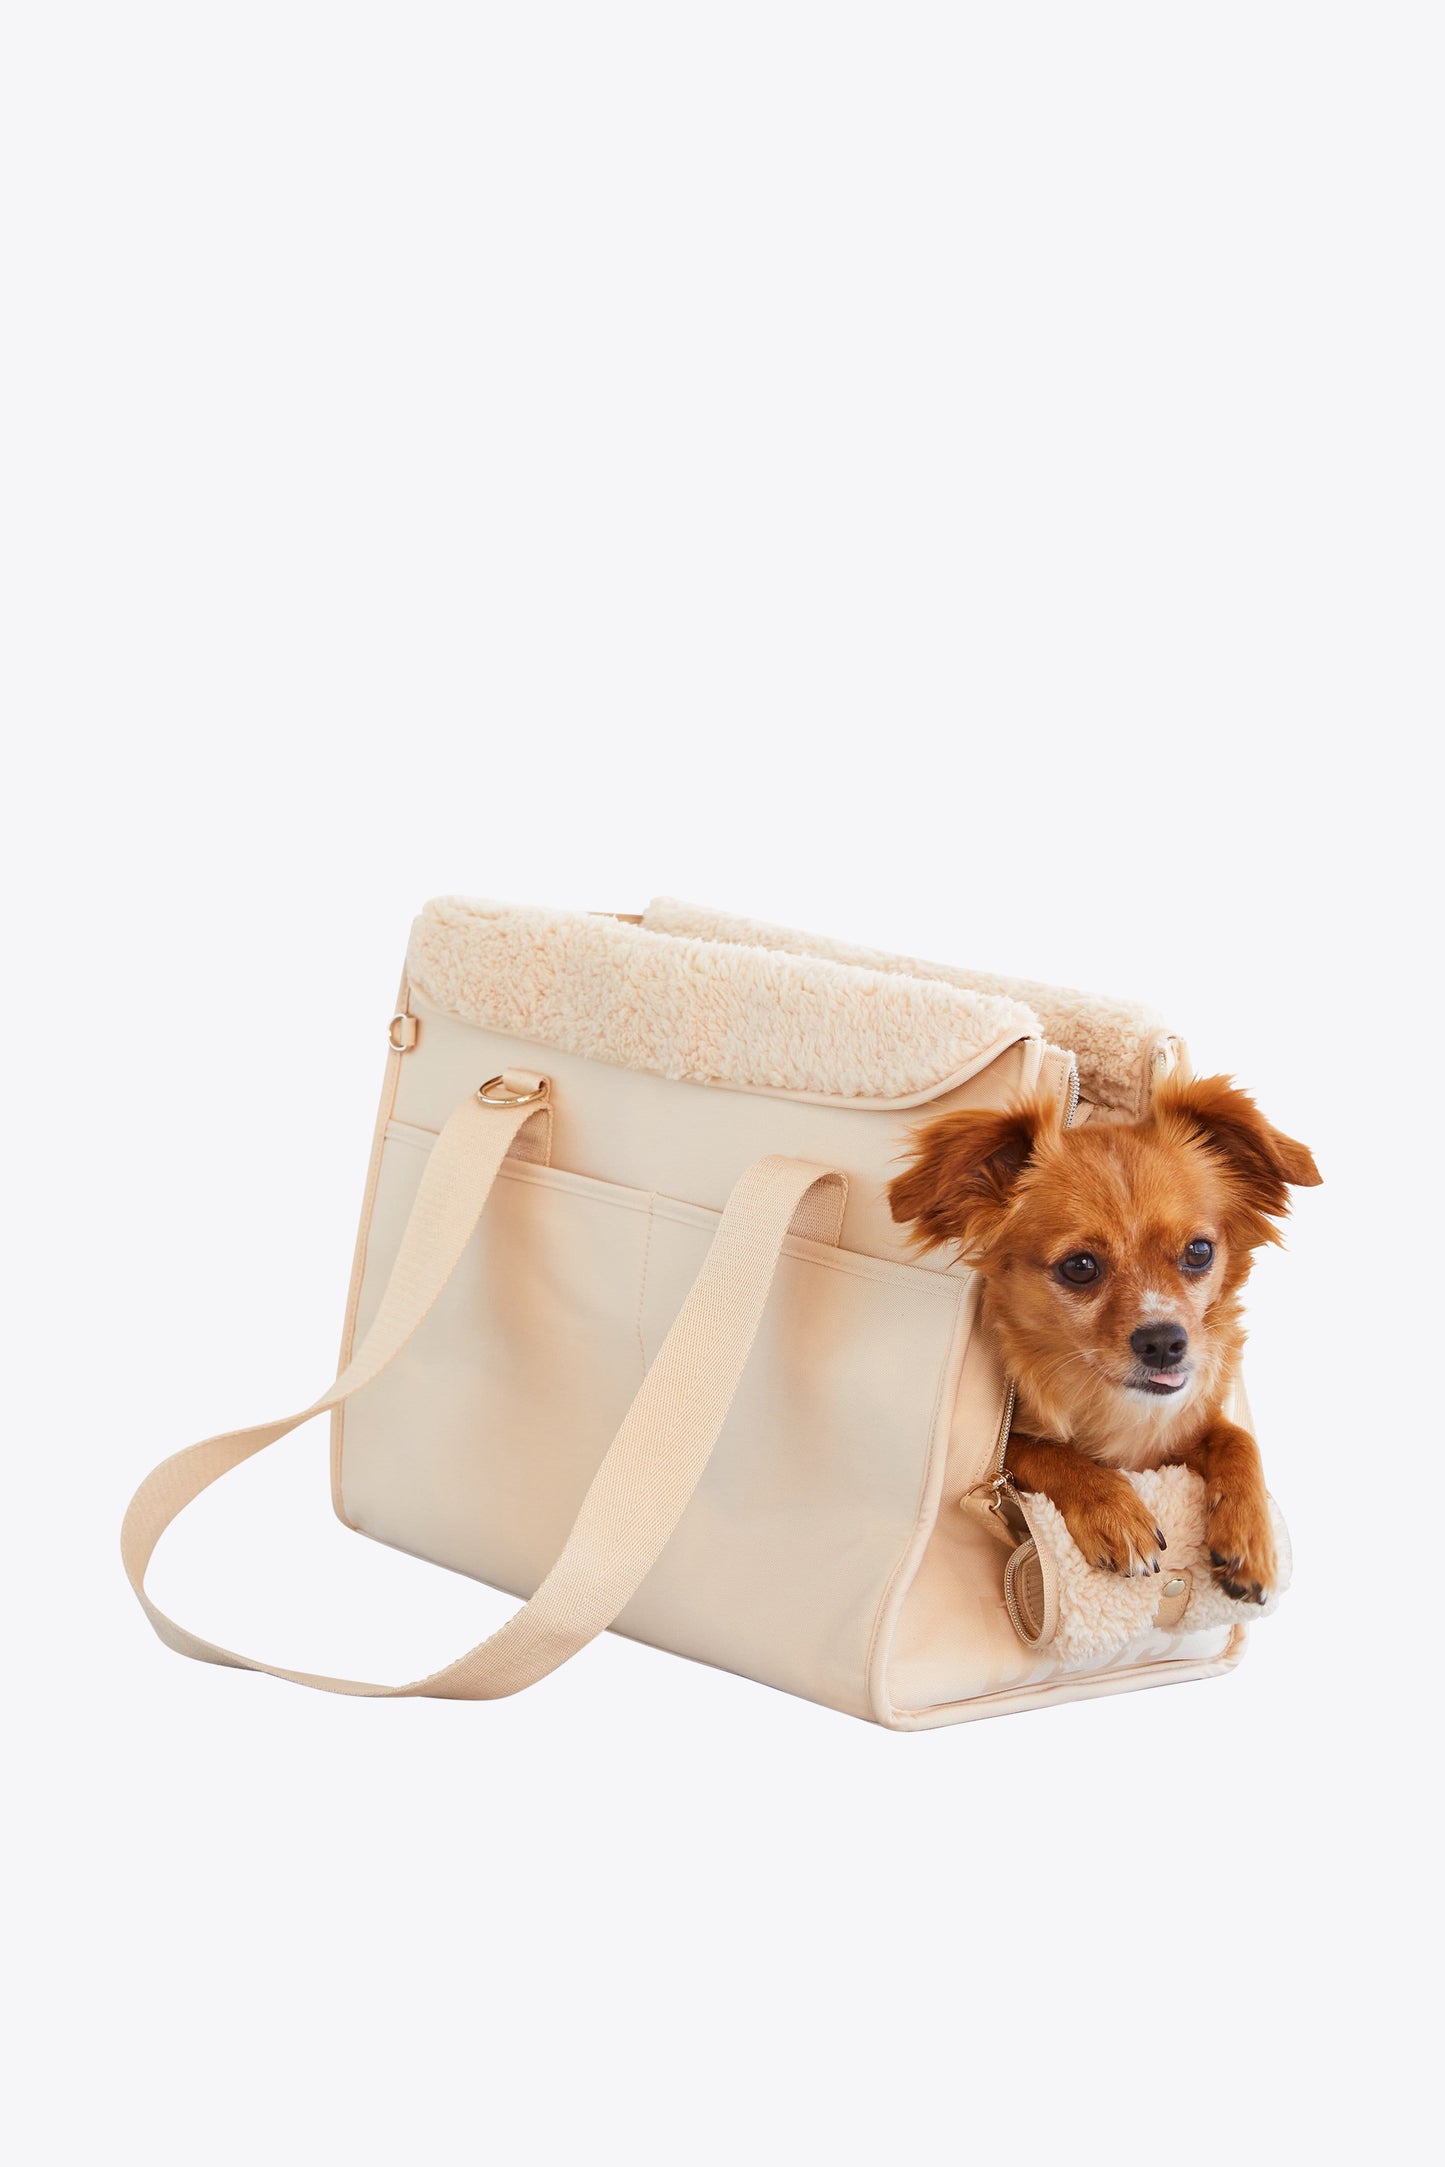 louis dog bag carrier